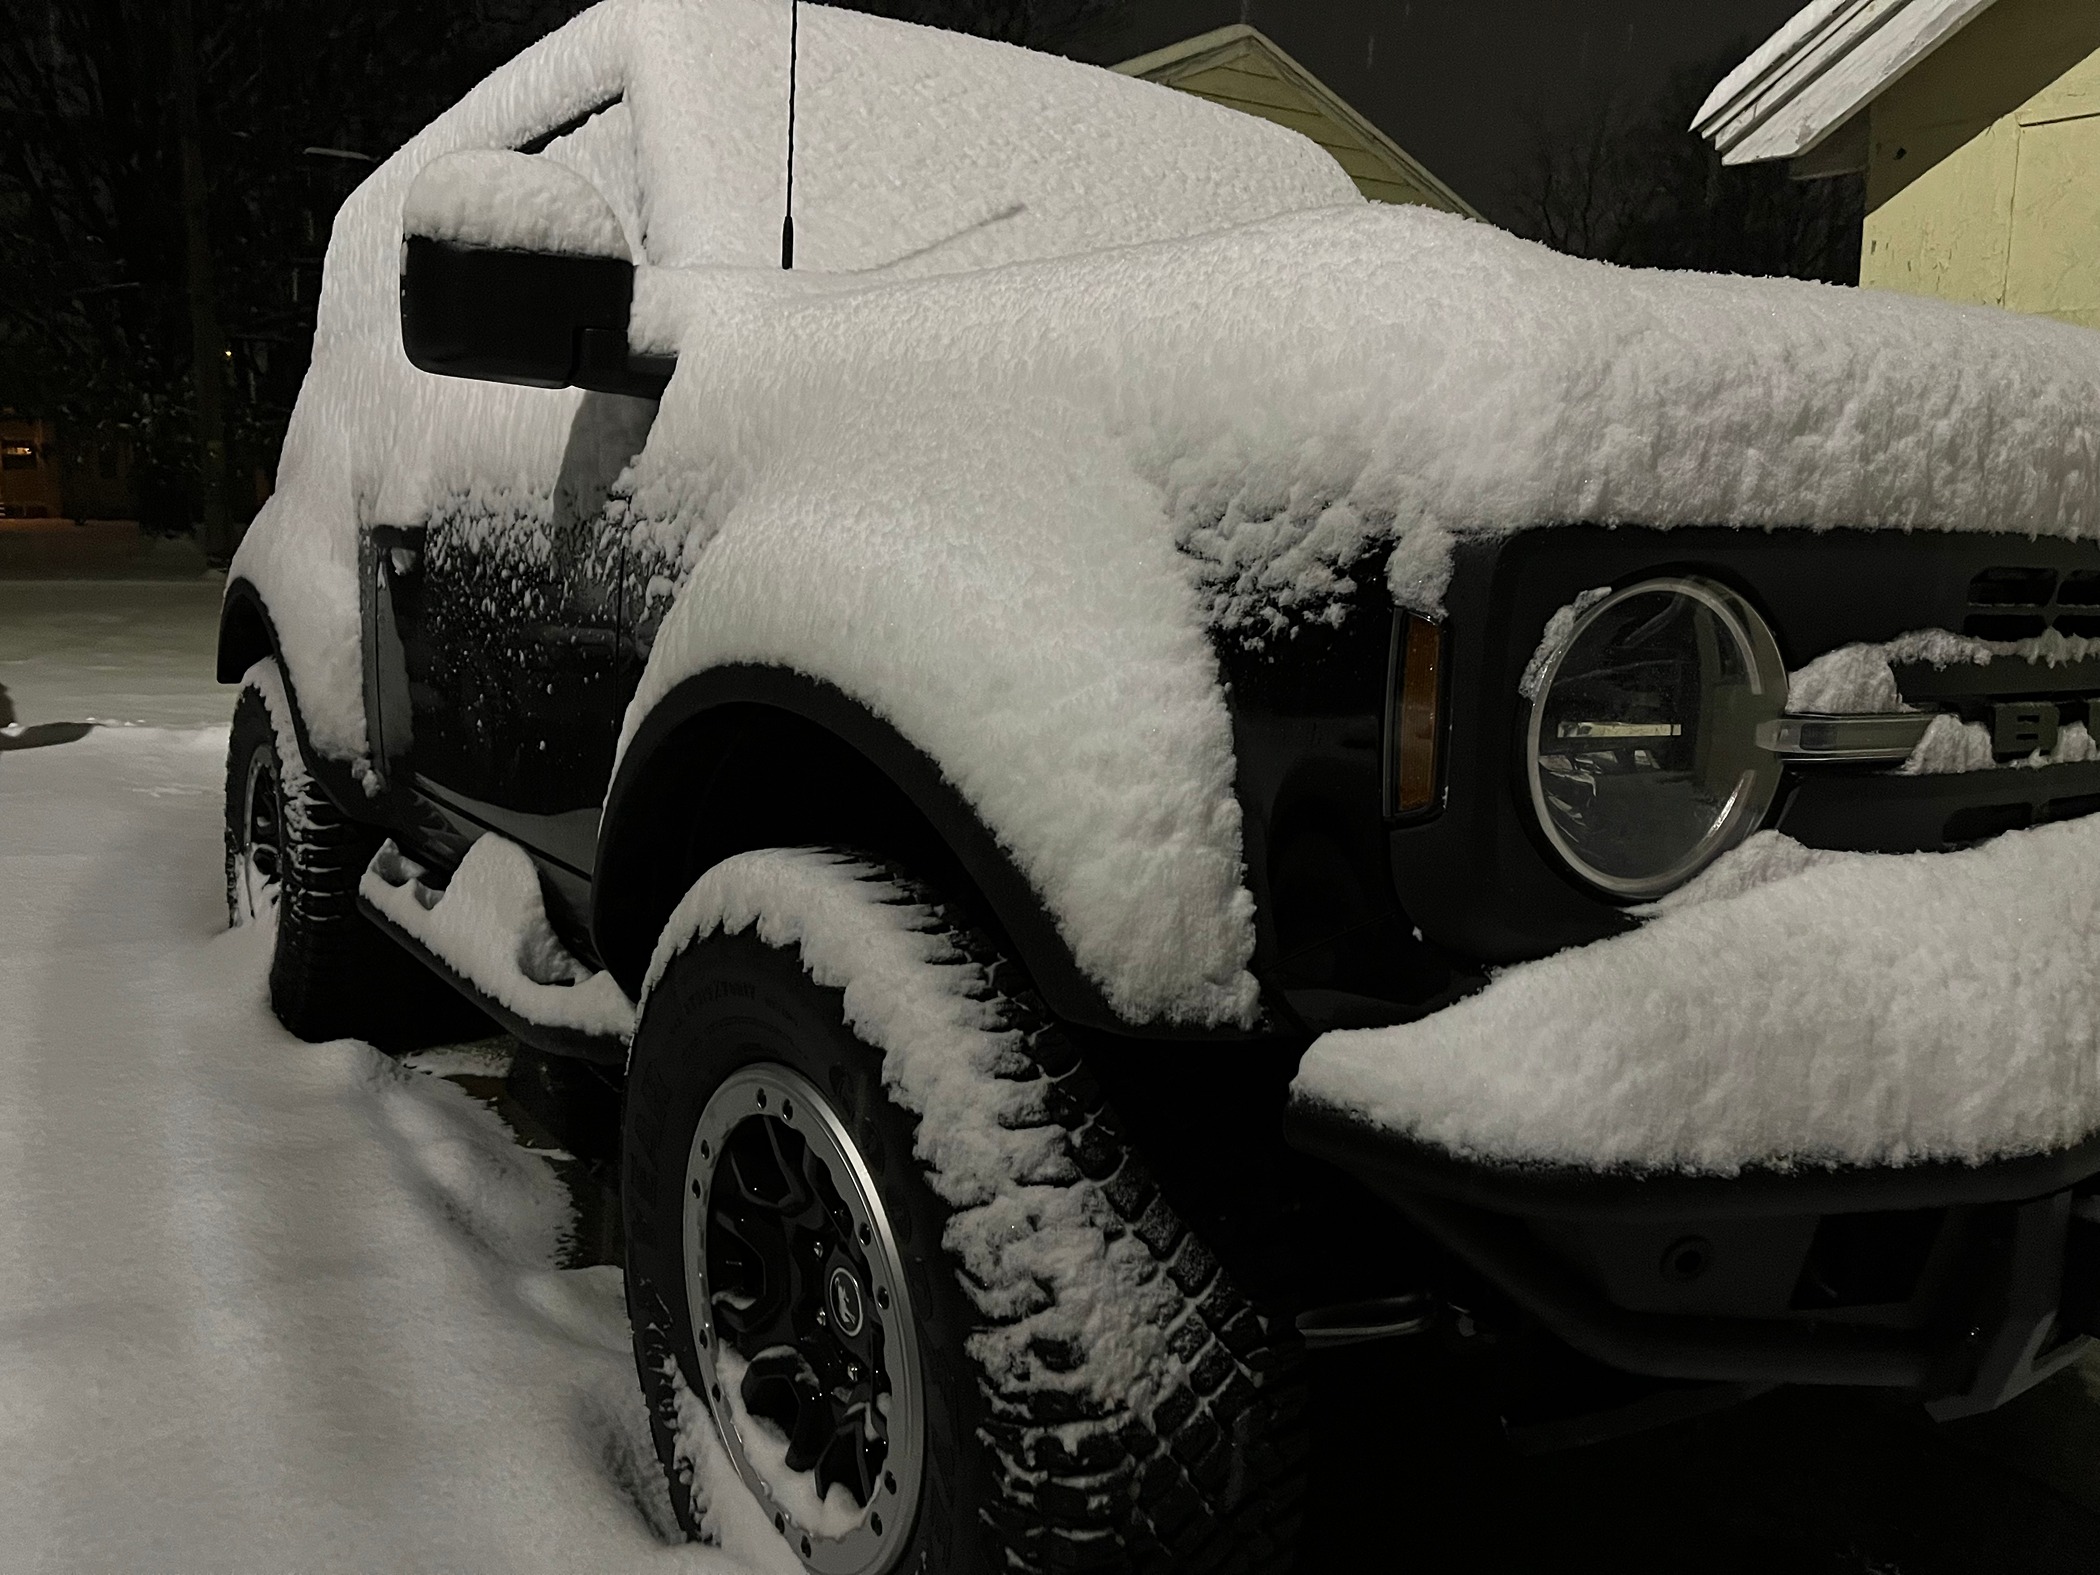 Ford Bronco ❄️❄️❄️❄️ Snow Day Saturday ❄️❄️❄️❄️❄️ IMG_2071.JPG